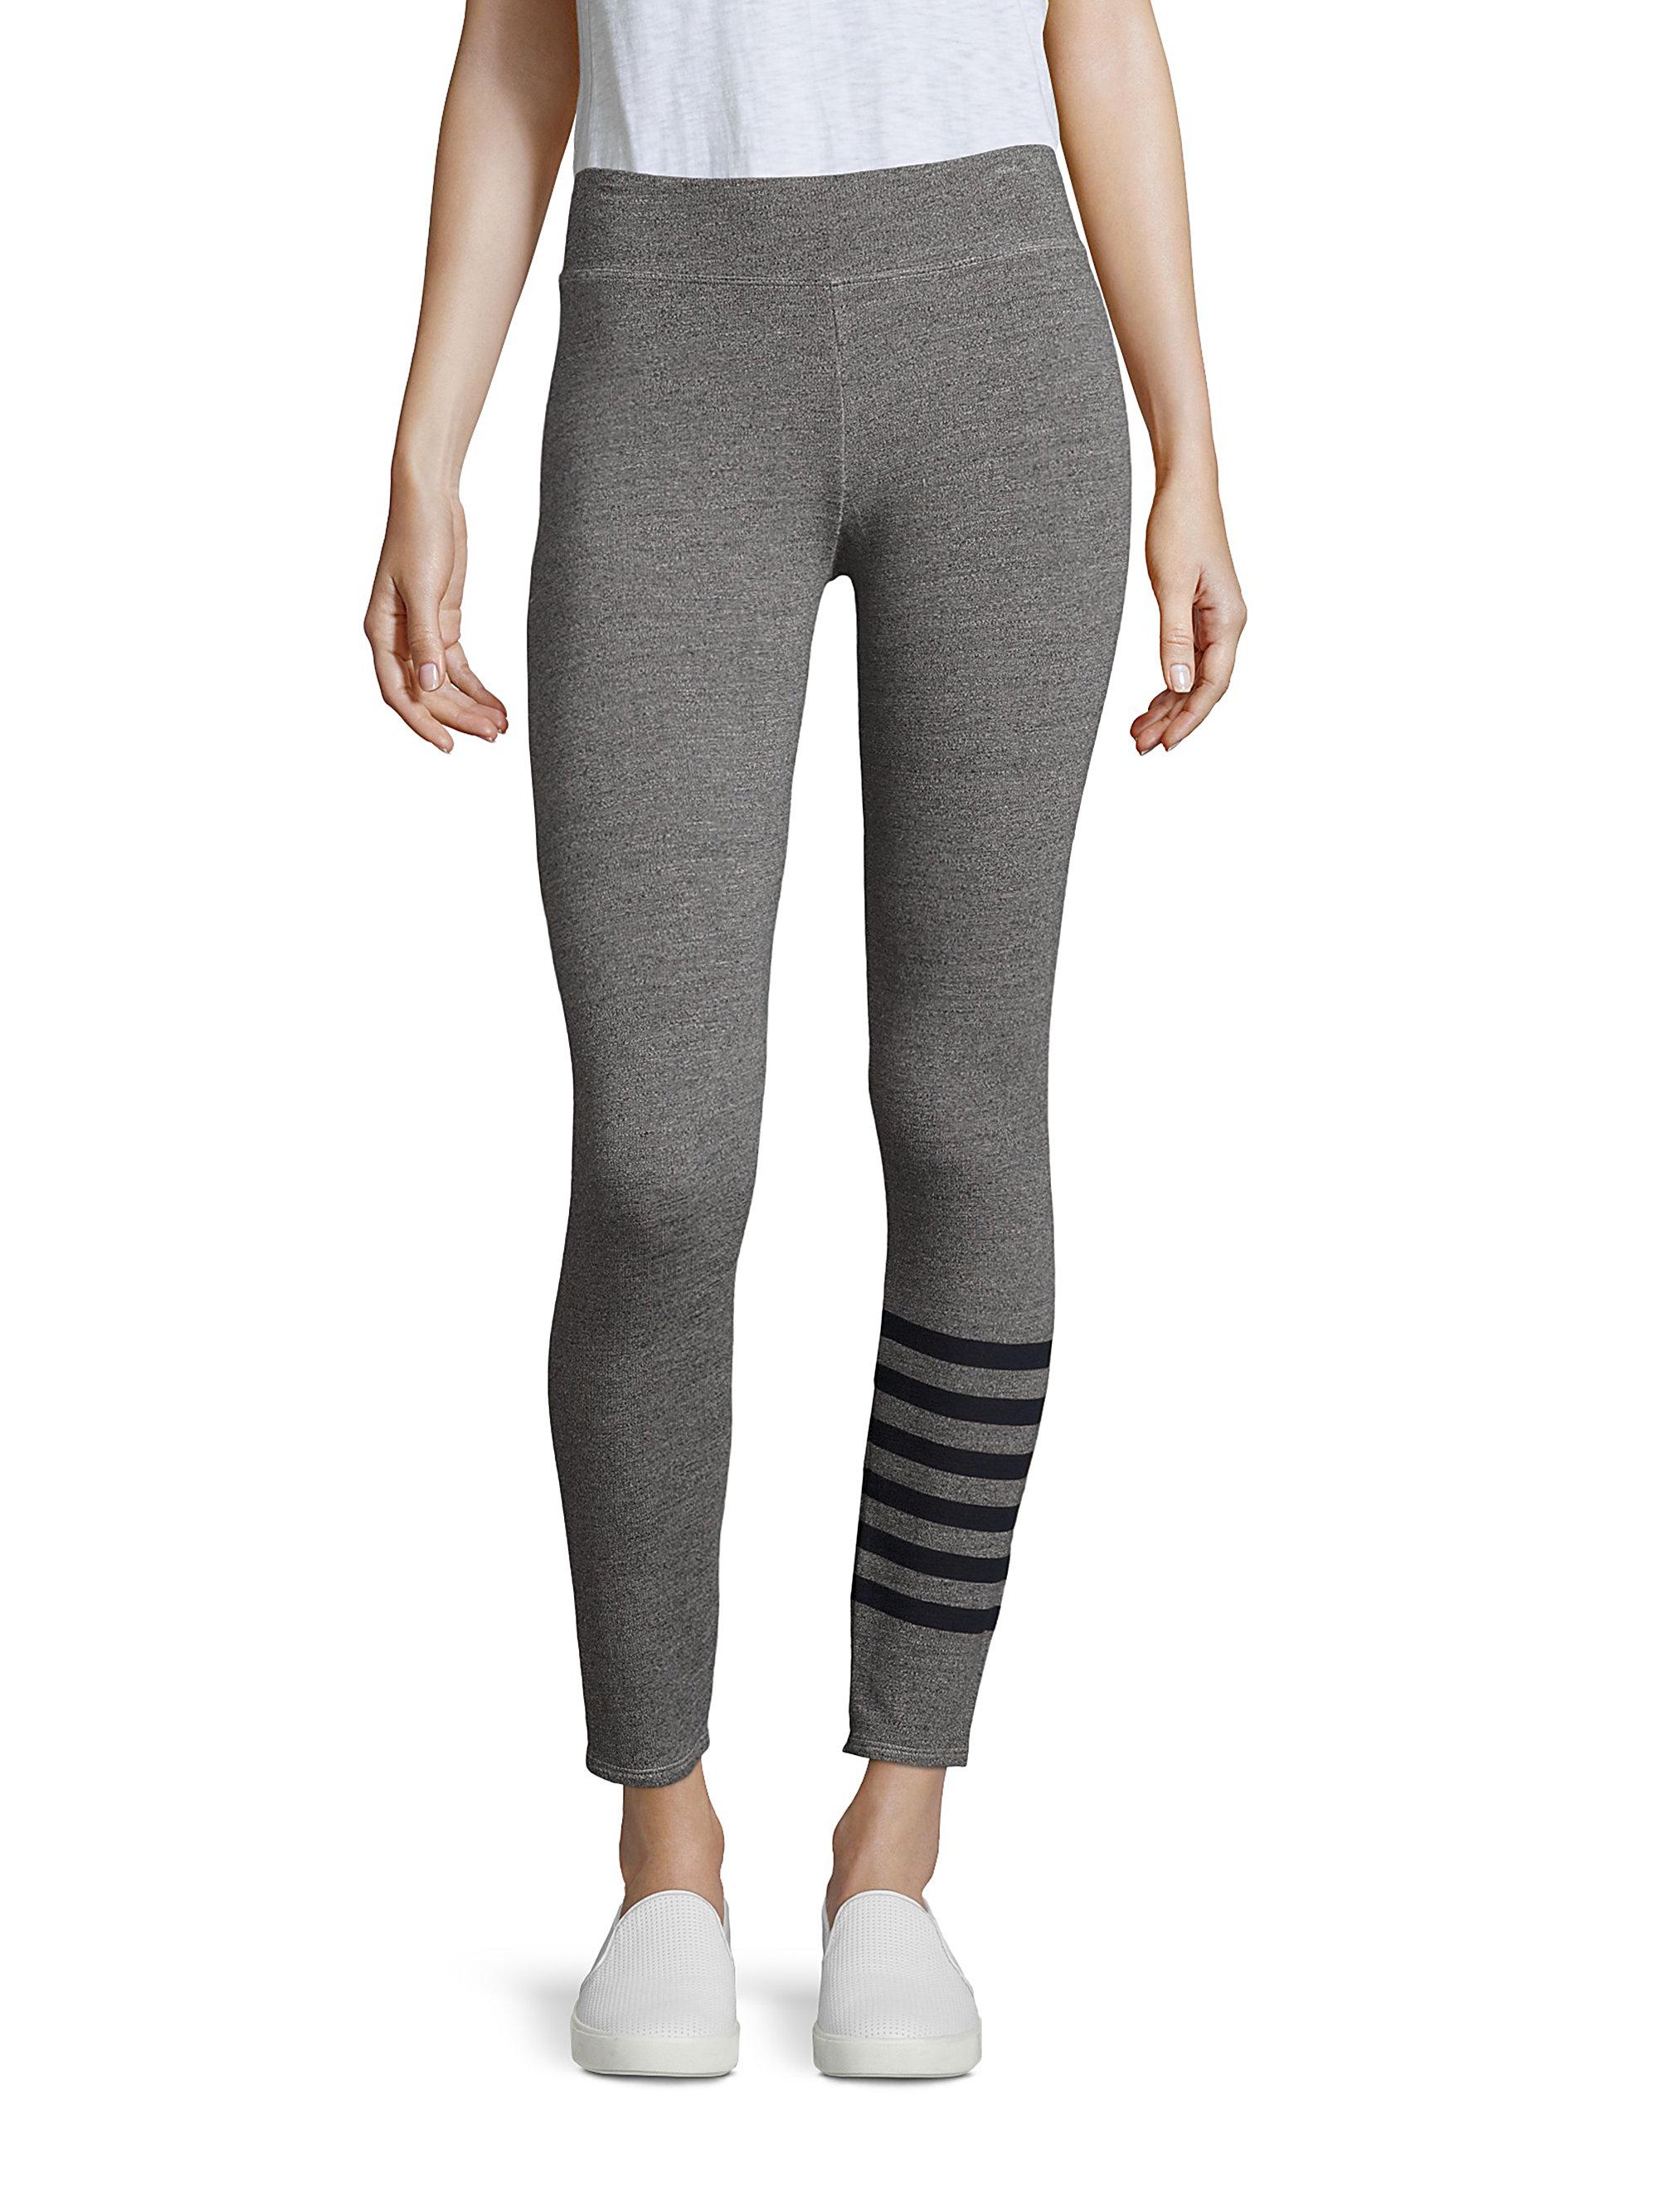 Lyst - Sundry Heathered Yoga Pants in Gray